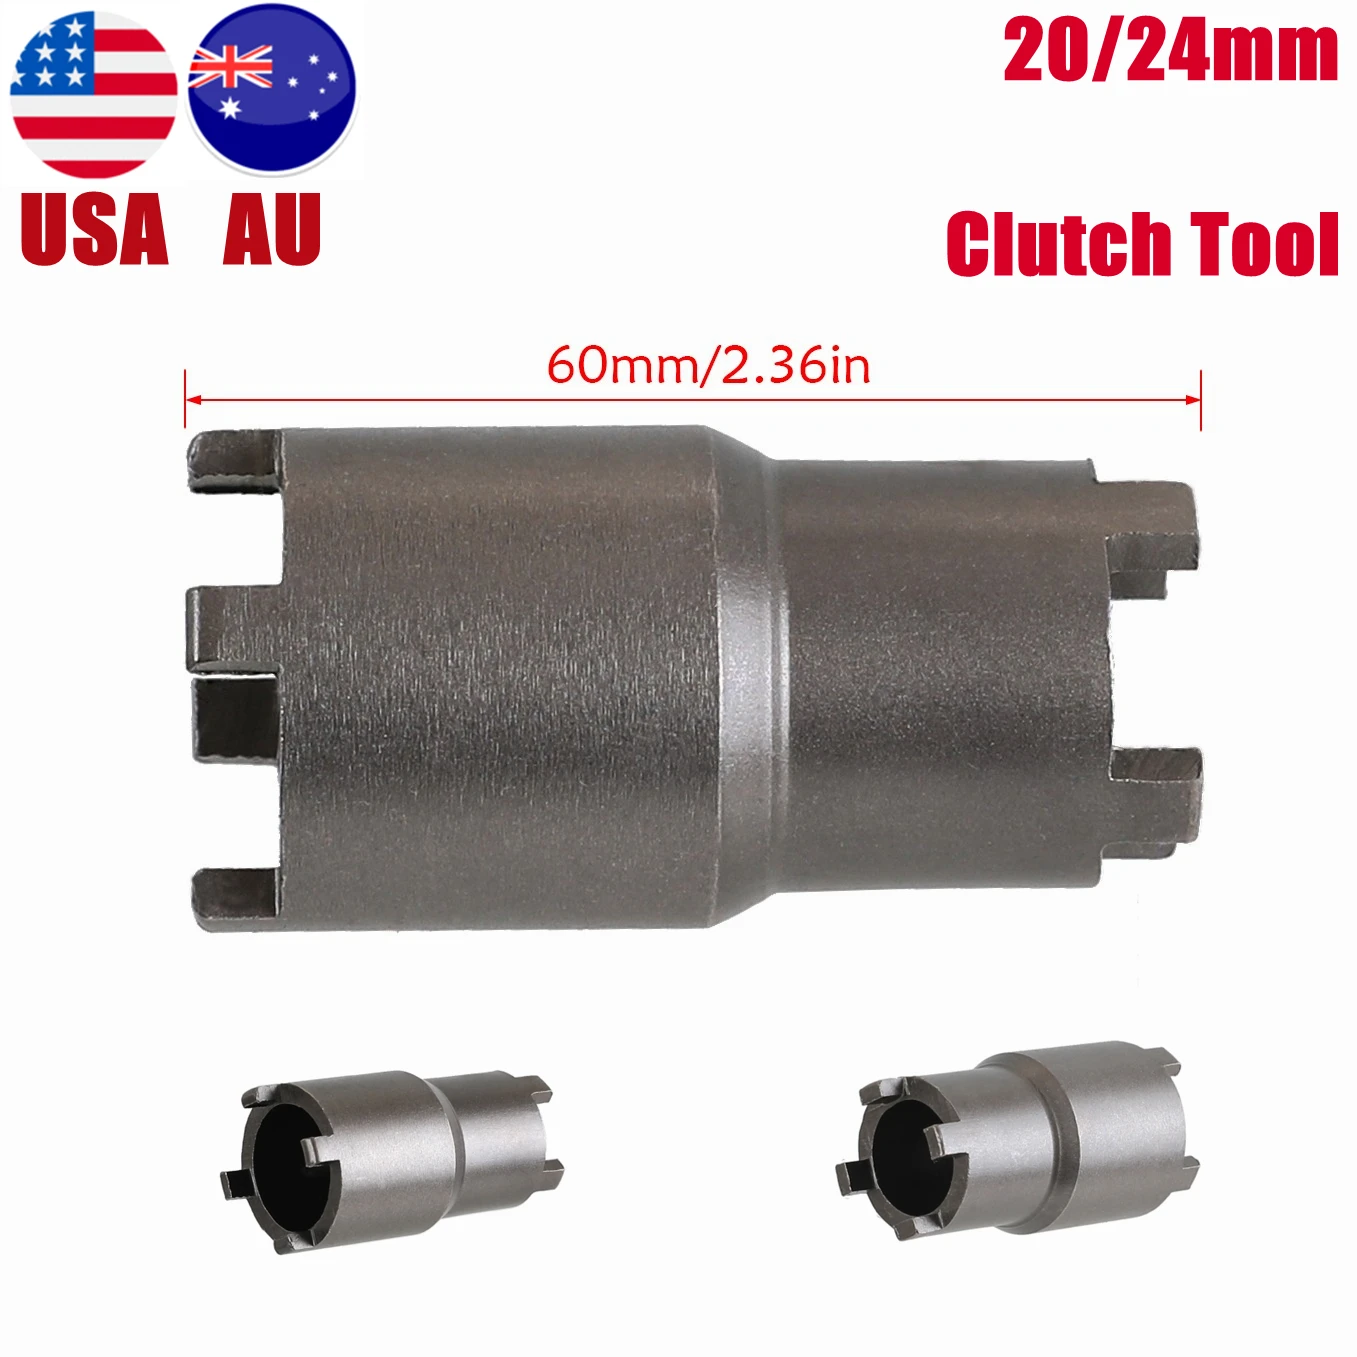 20/24mm Clutch Tool Lock Nut Spanner Wrench For Honda CRF50 XR200 XR50 C70 ATC70 